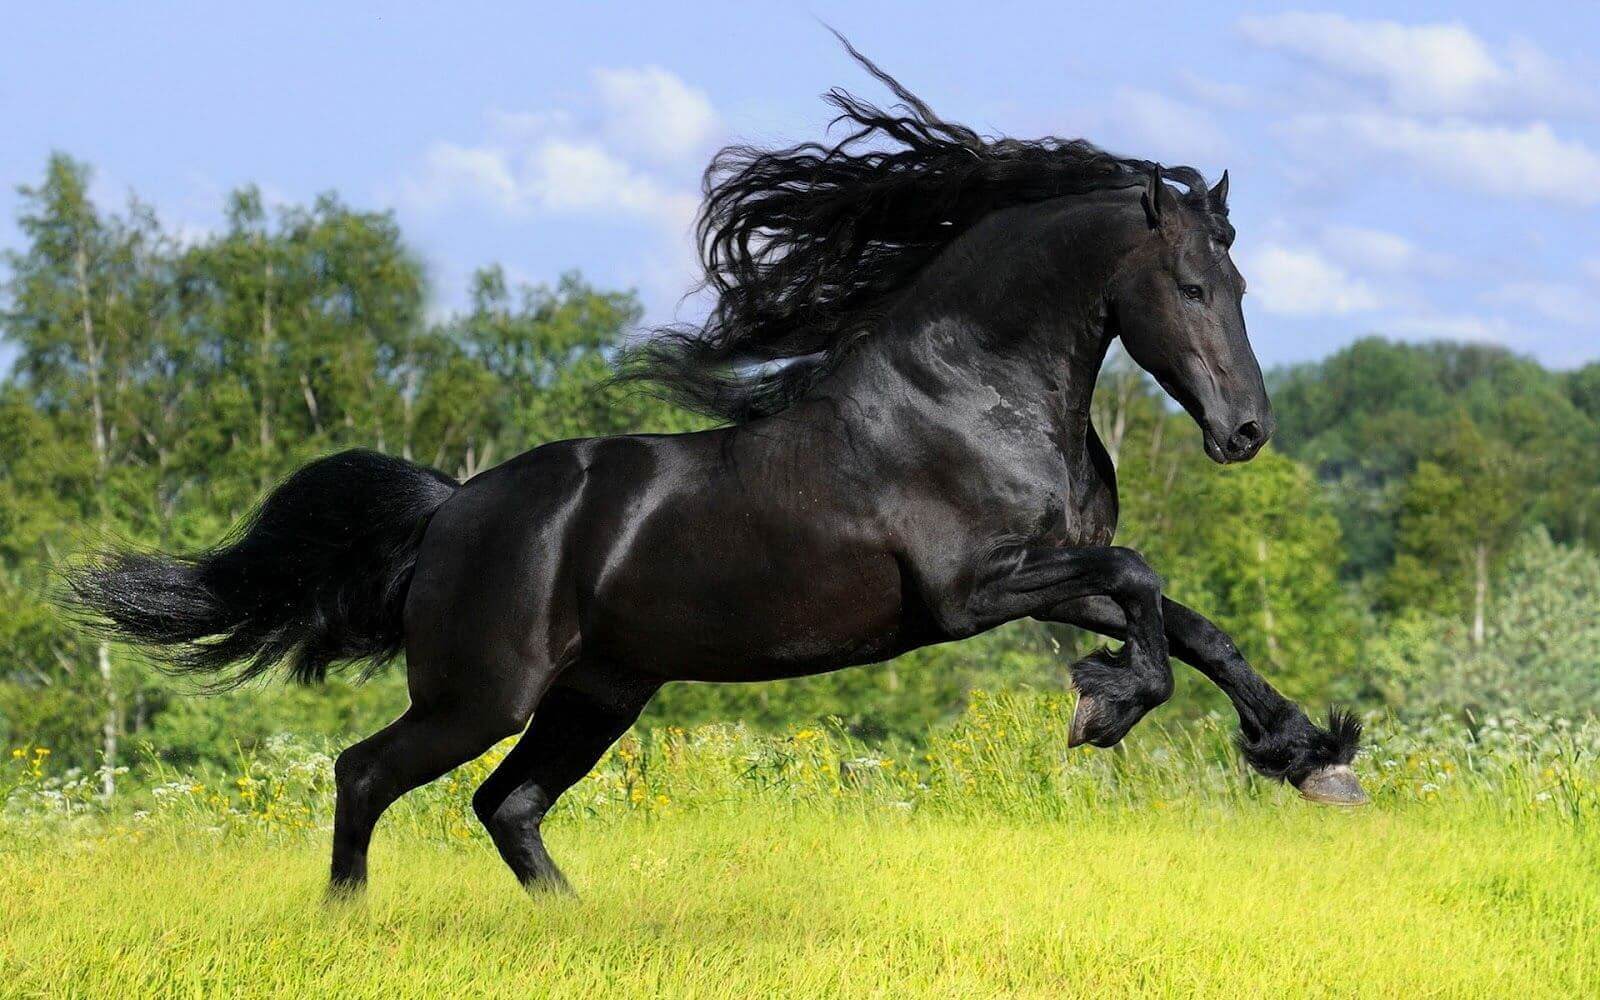 Black coated horse